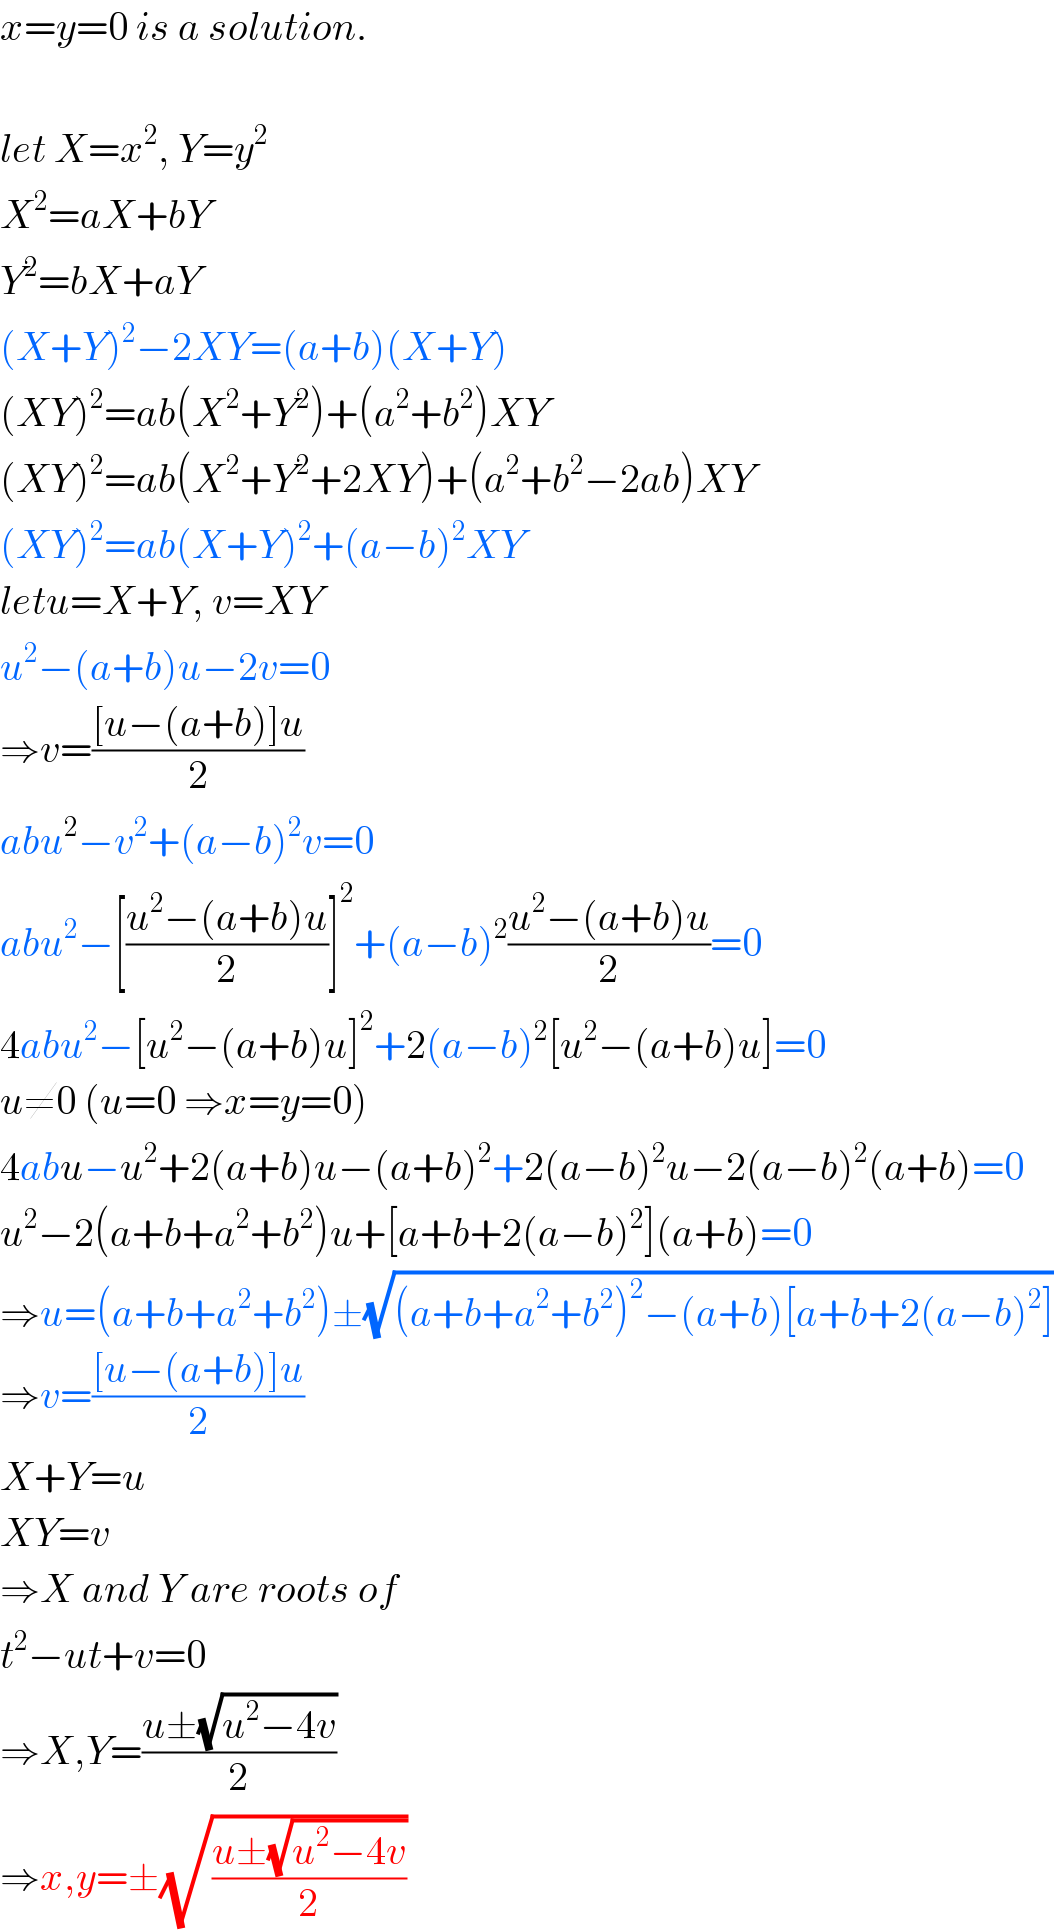 Tinkutara Equation Editor Math Forum Question 505